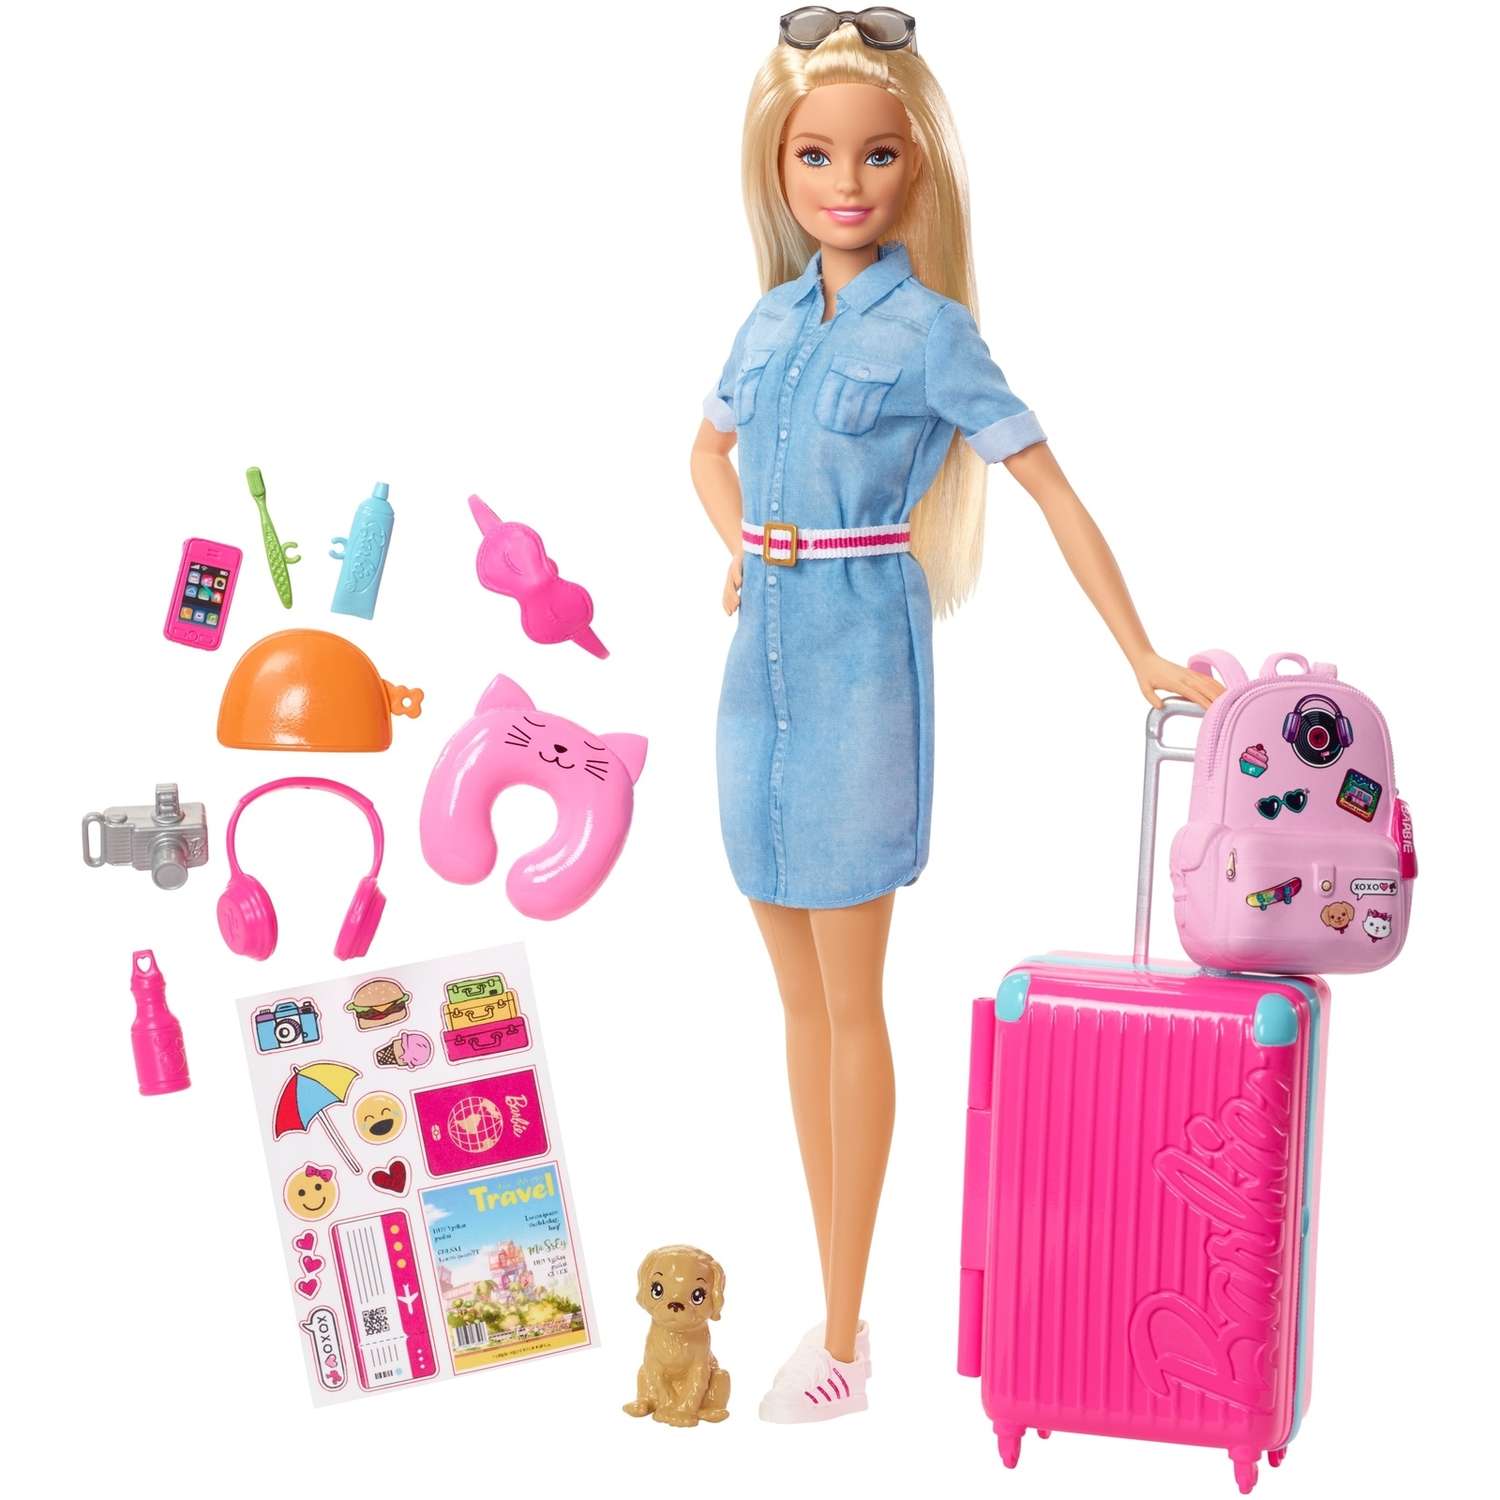 Кукла Barbie из серии Путешествие FWV25 FWV25 - фото 1